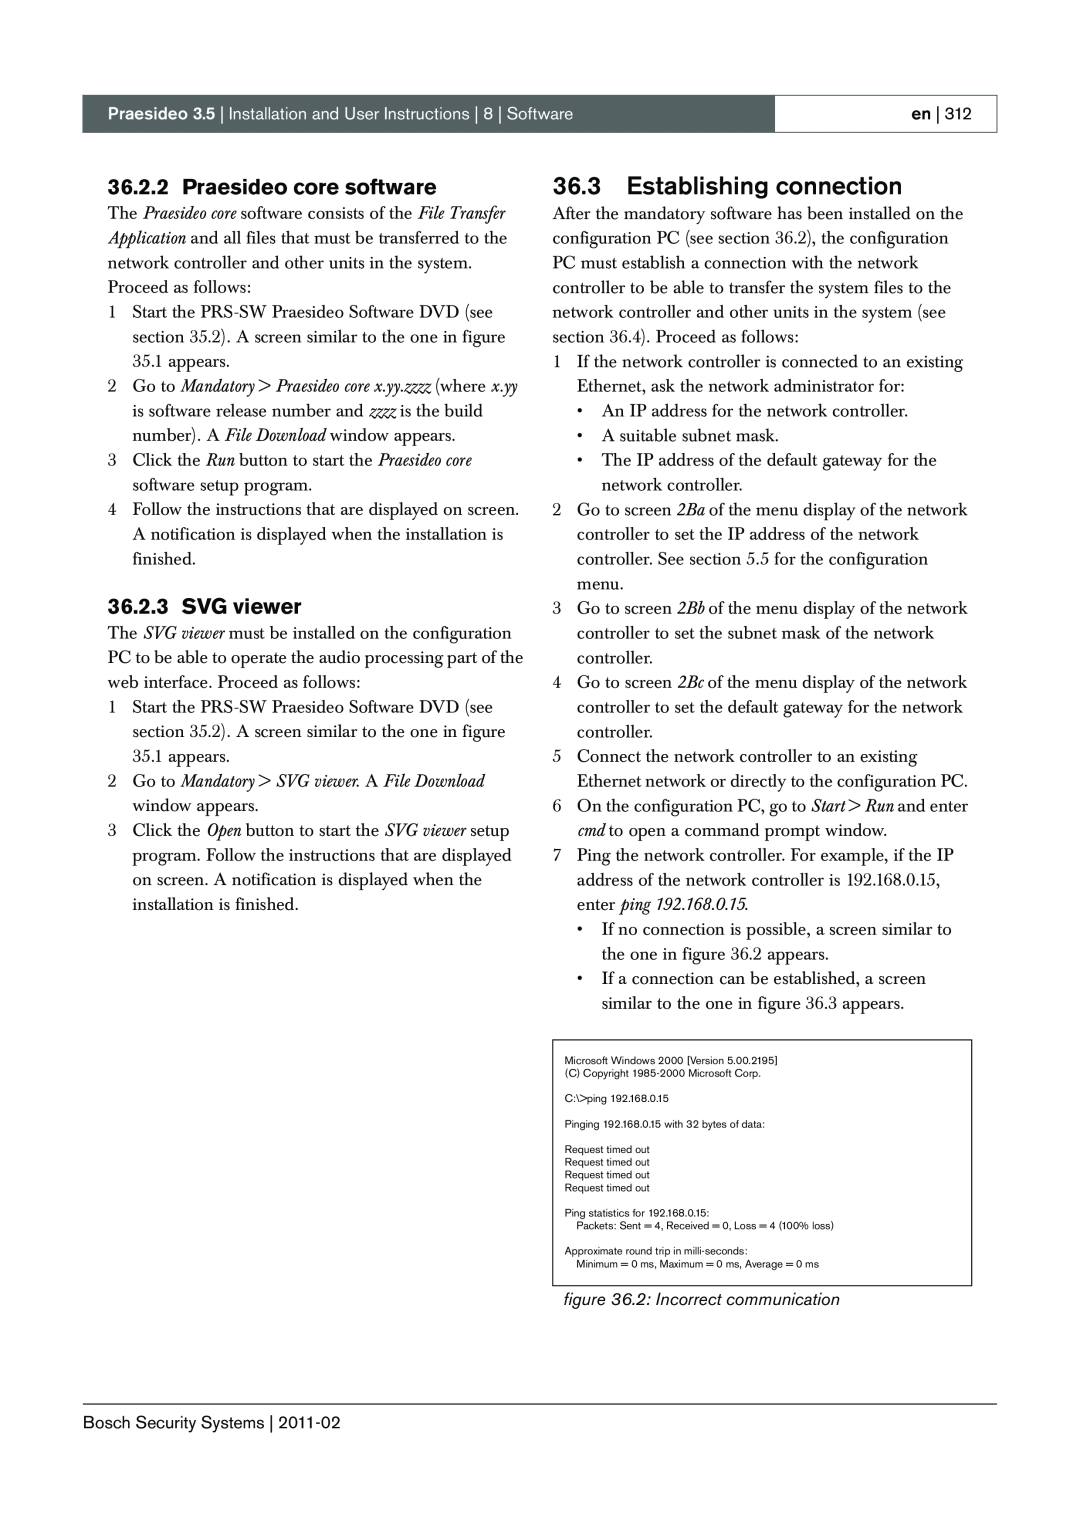 Bosch Appliances 3.5 manual 36.3Establishing connection, Praesideo core software, SVG viewer, 2: Incorrect communication 